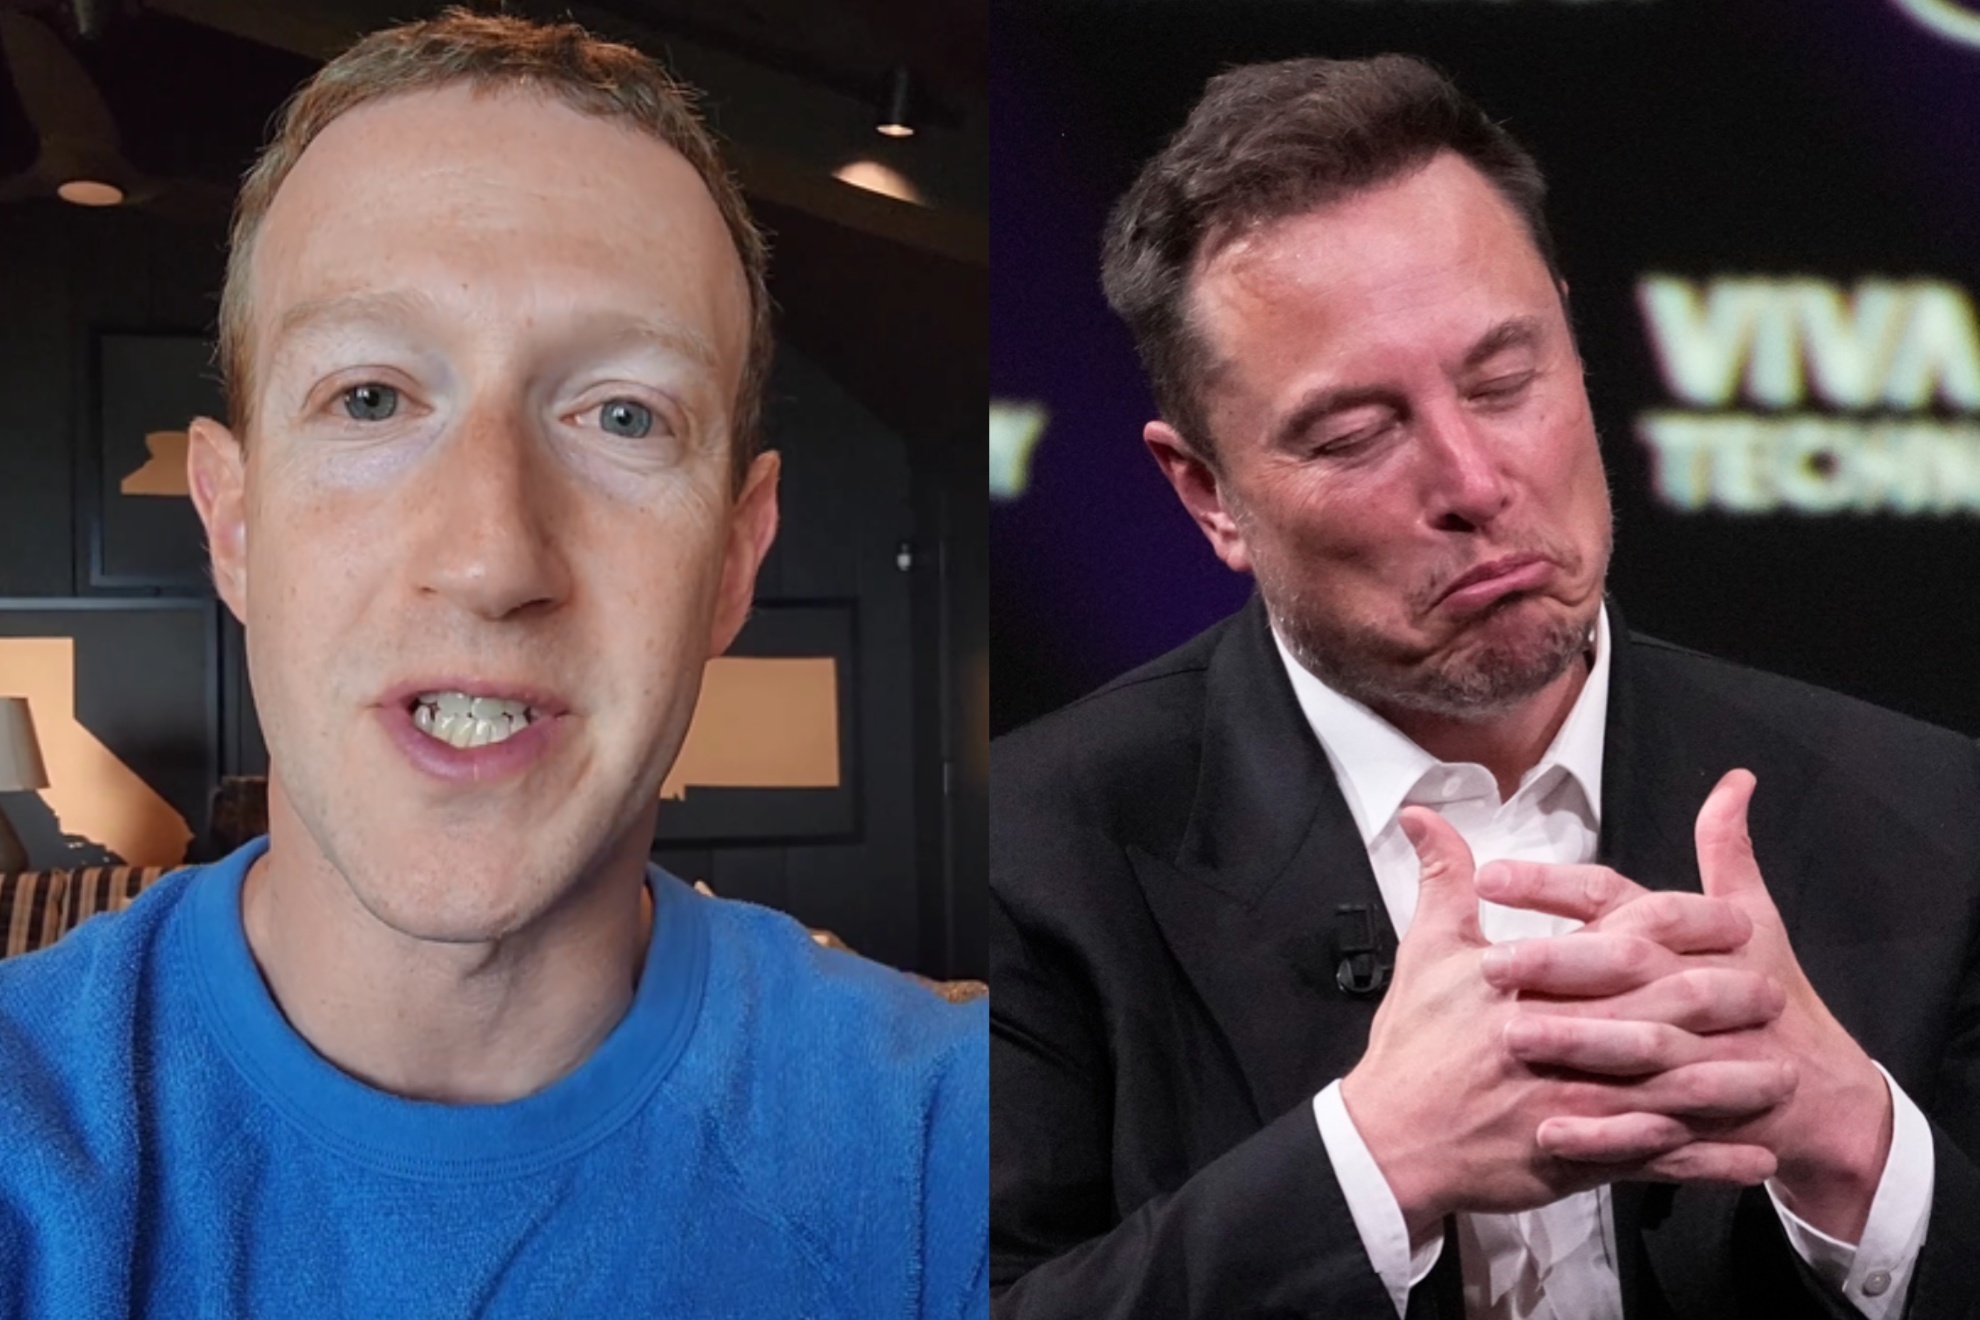 The social media war continues between Mark Zuckerberg and Elon Musk